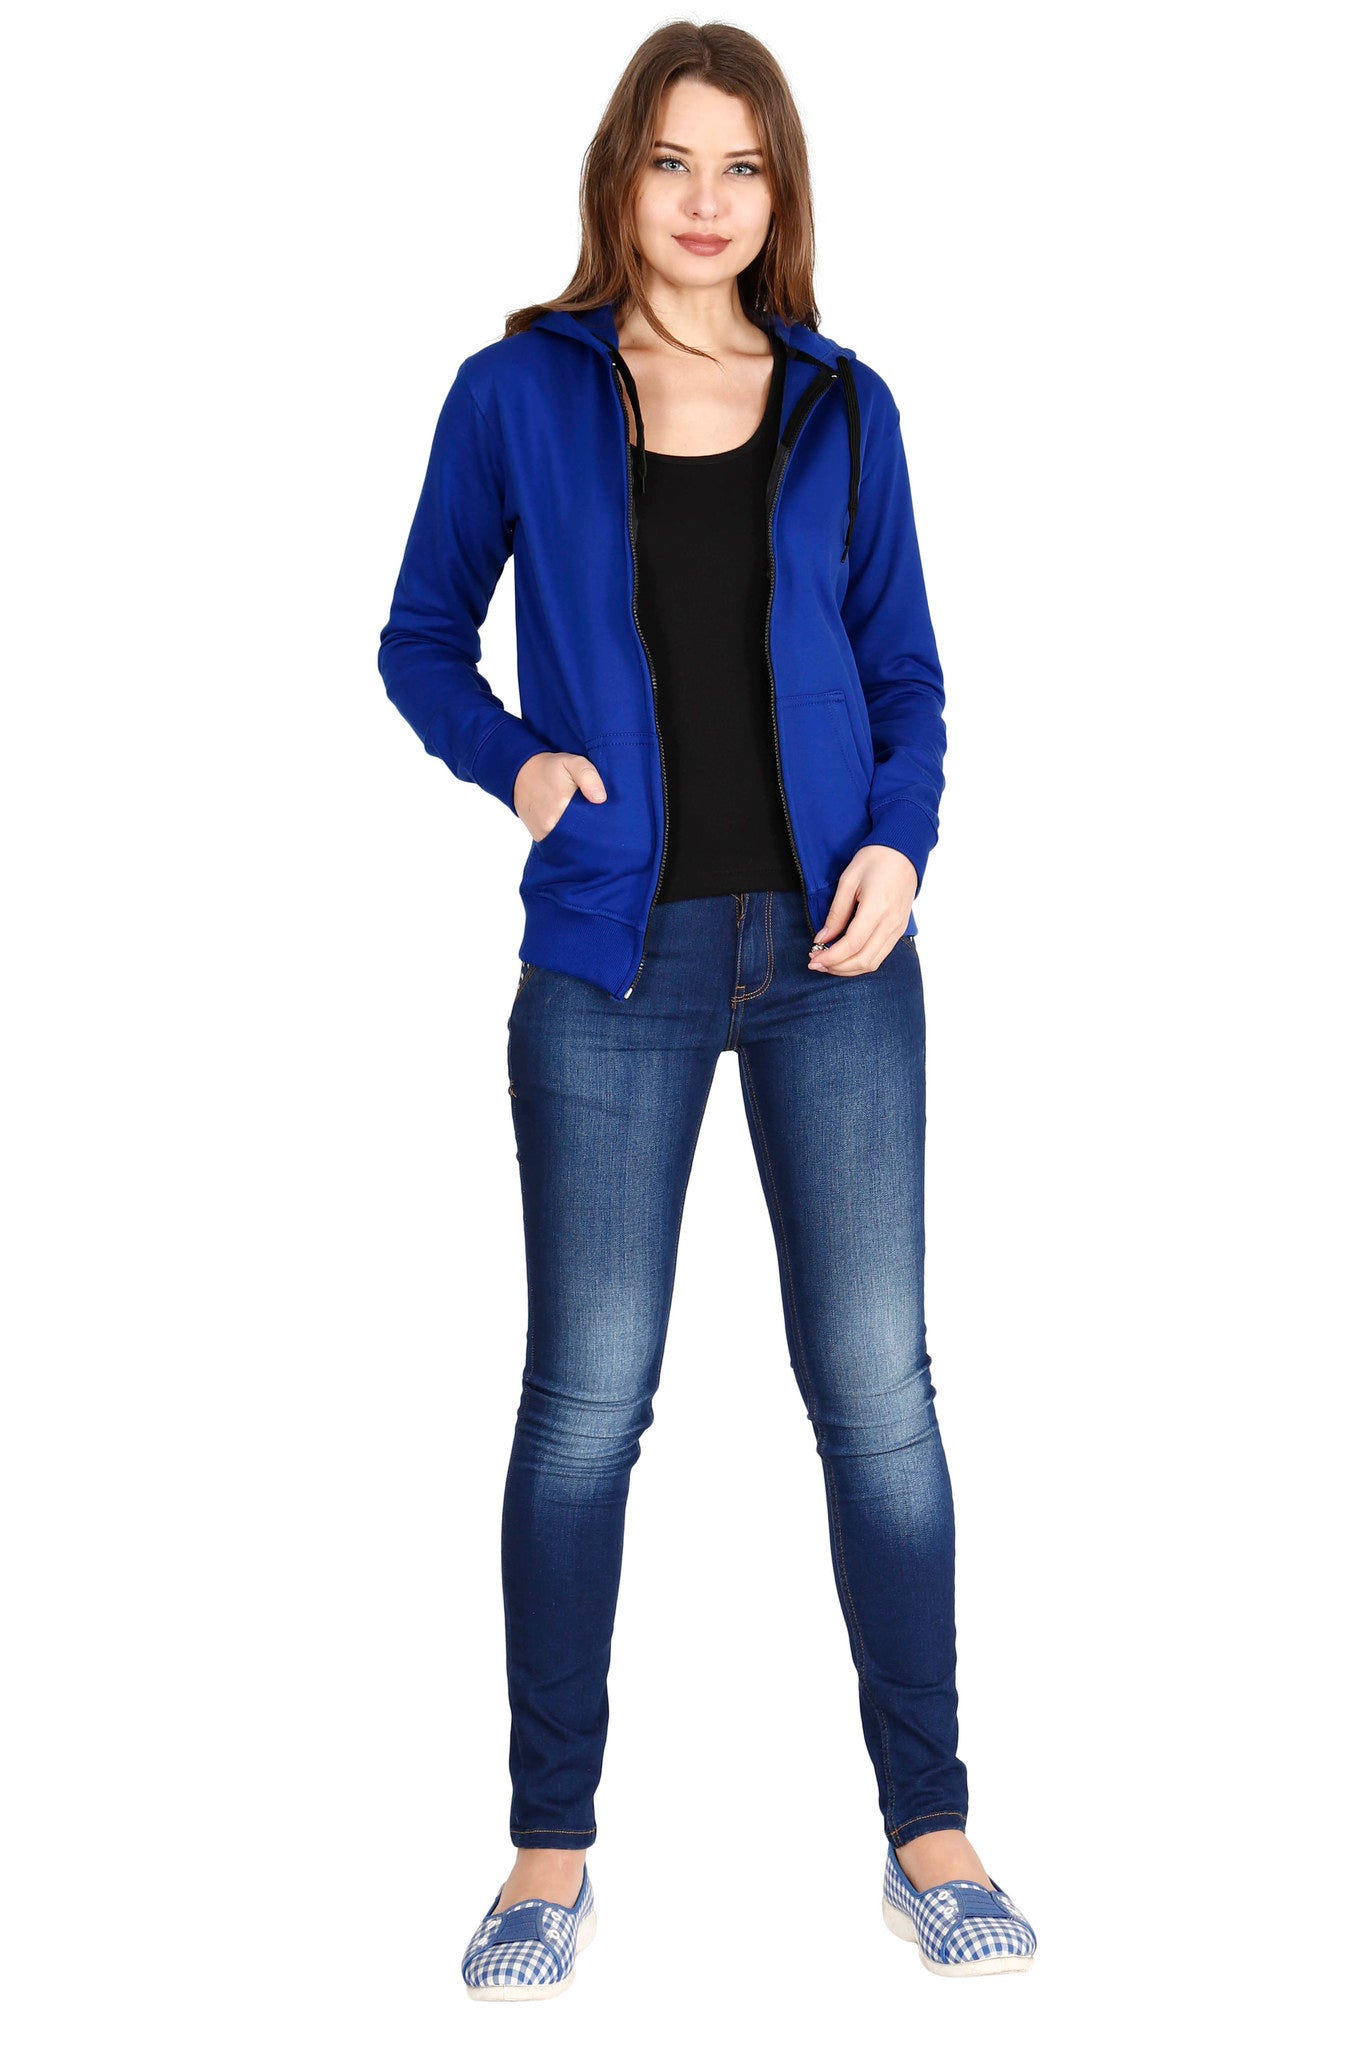 Women's Cotton Plain Full Sleeve Royal Blue Color Hoodies/Sweatshirt